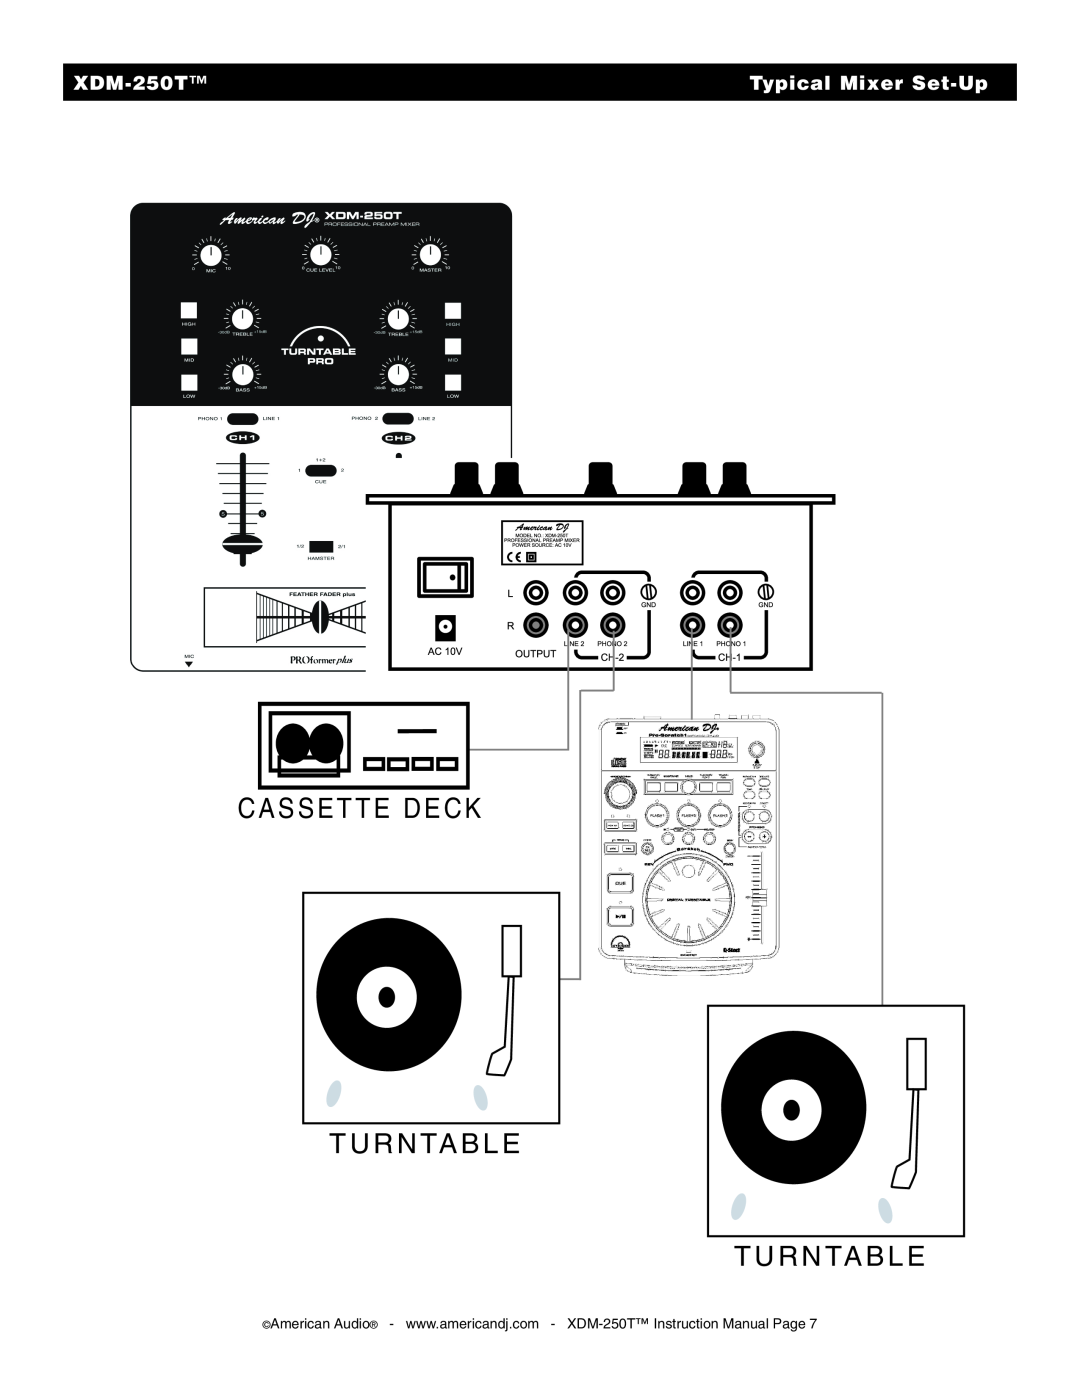 American Audio XDM-250TTM manual Cassette Deck T U R N Ta B L E T U R N Ta B L E, Typical Mixer Set-Up 